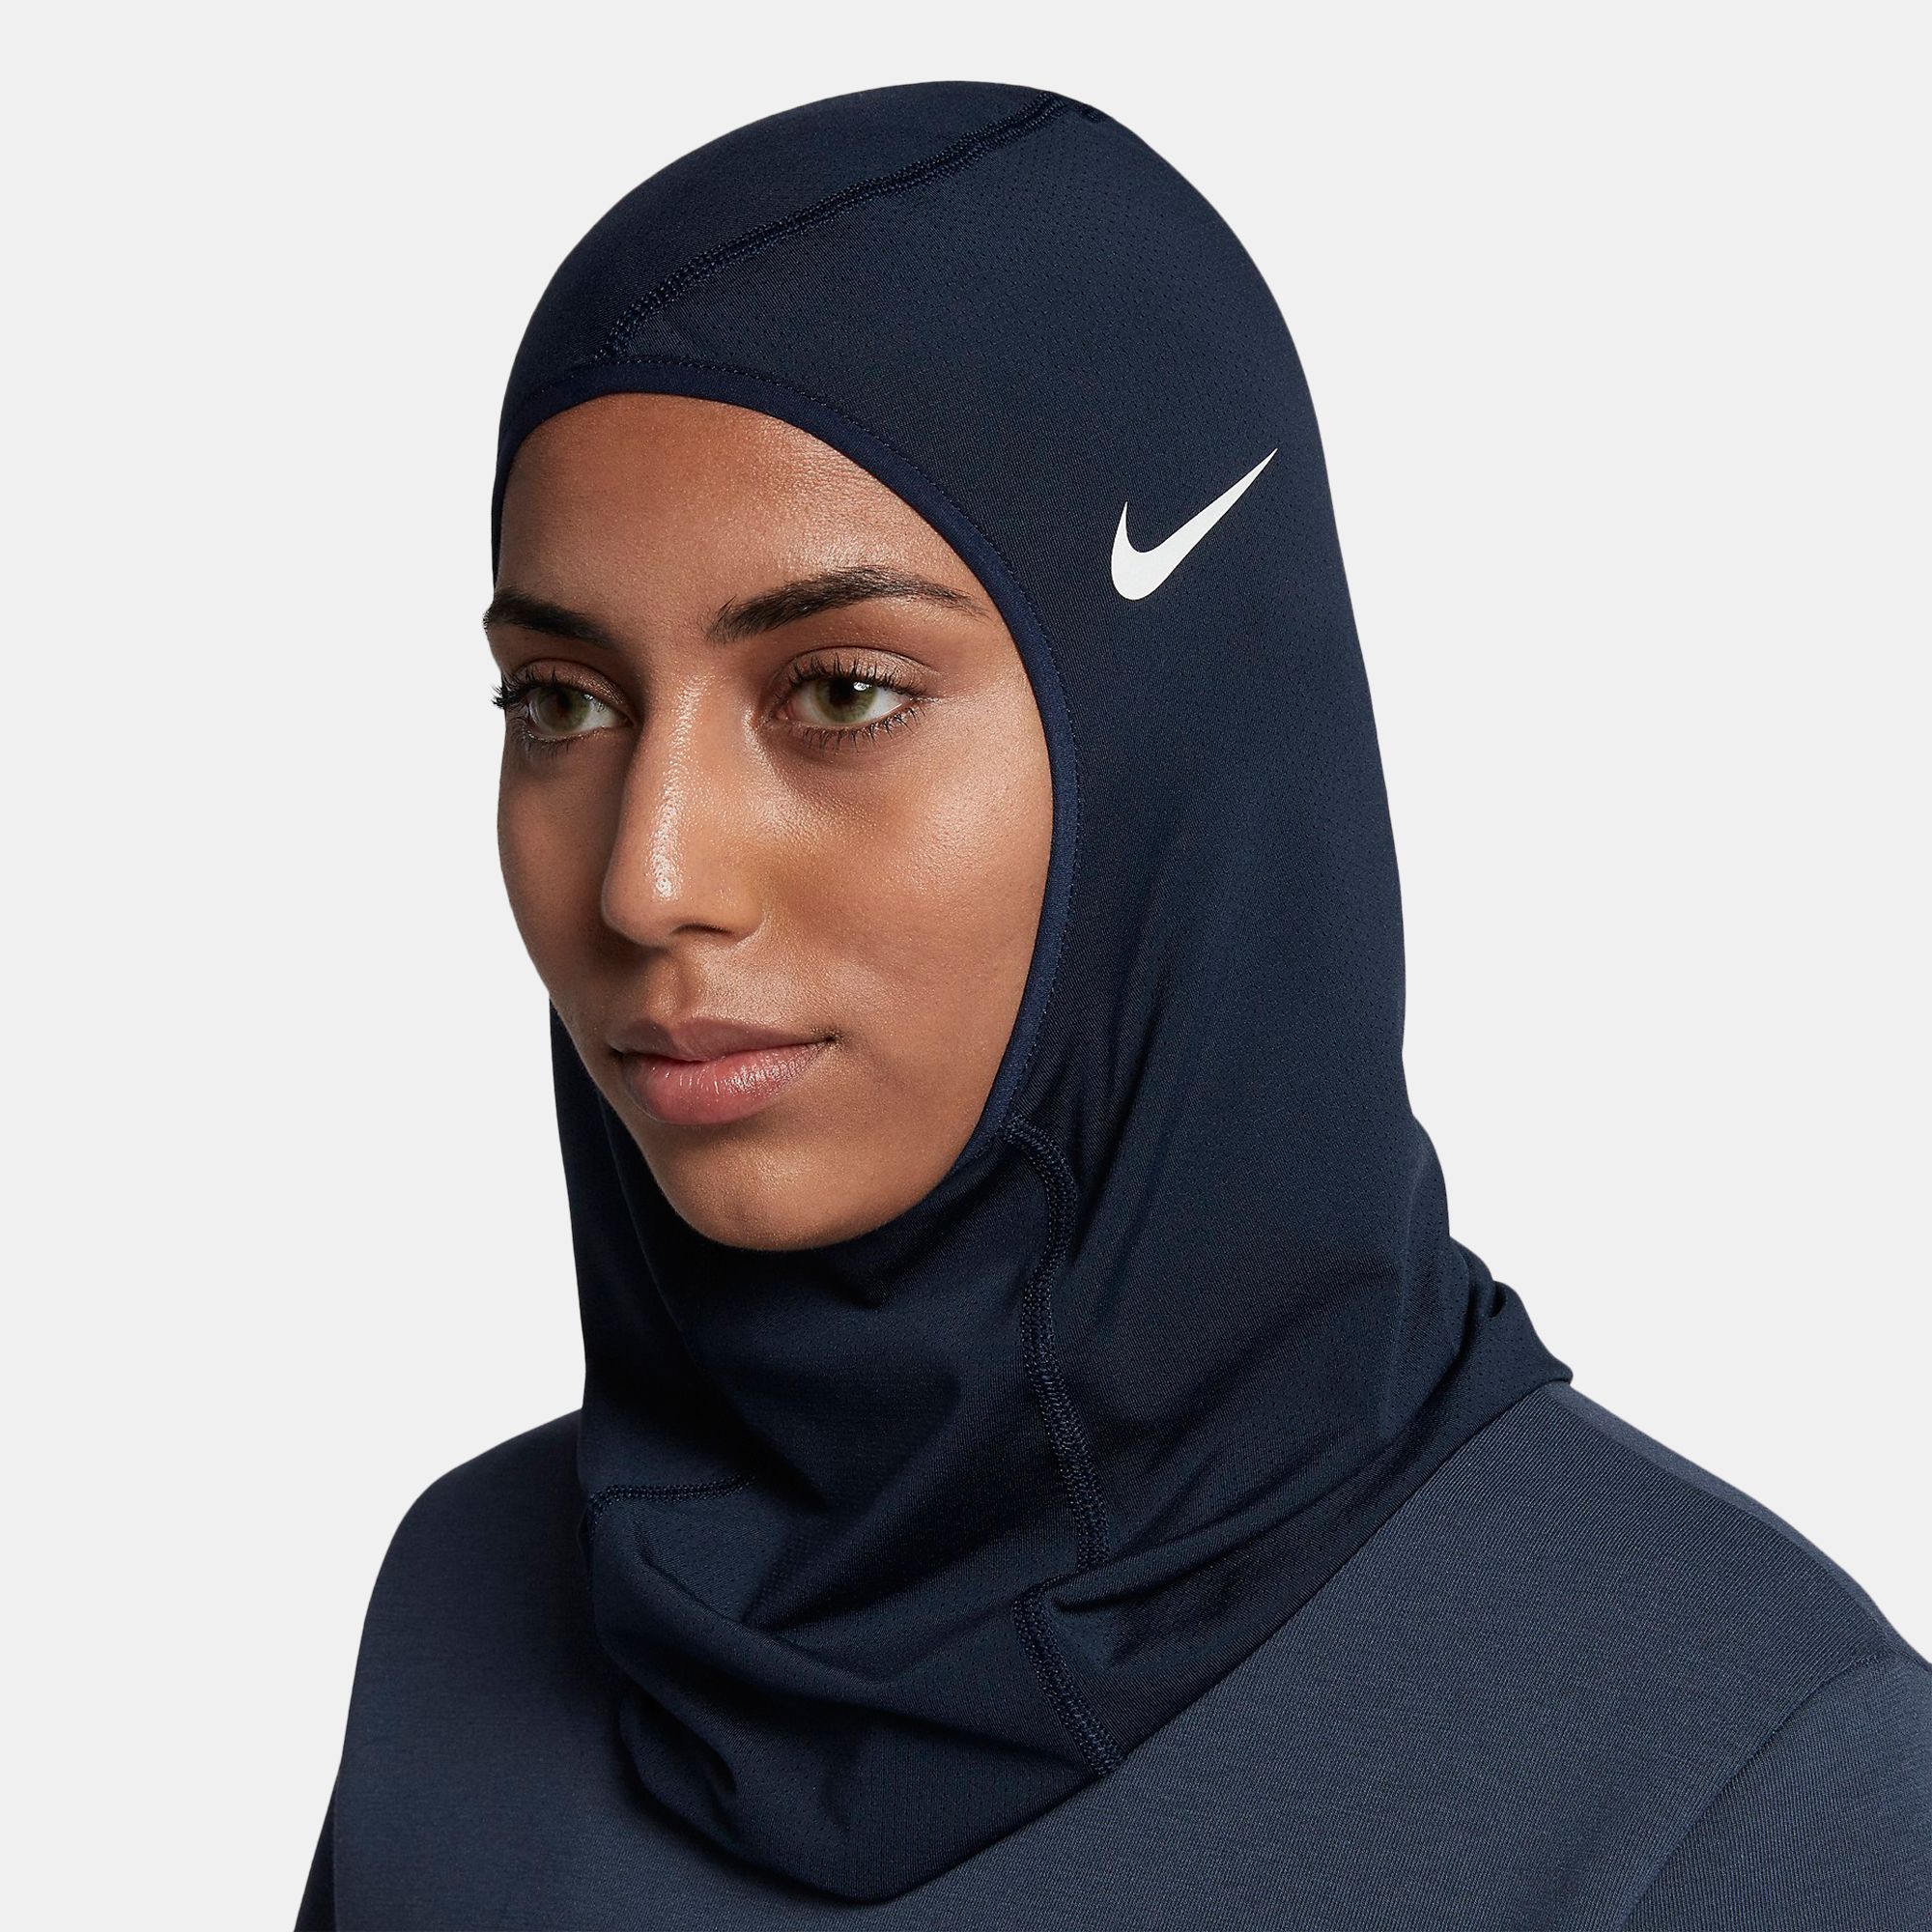 Buy Nike Pro Hijab Online in Dubai, UAE | SSS